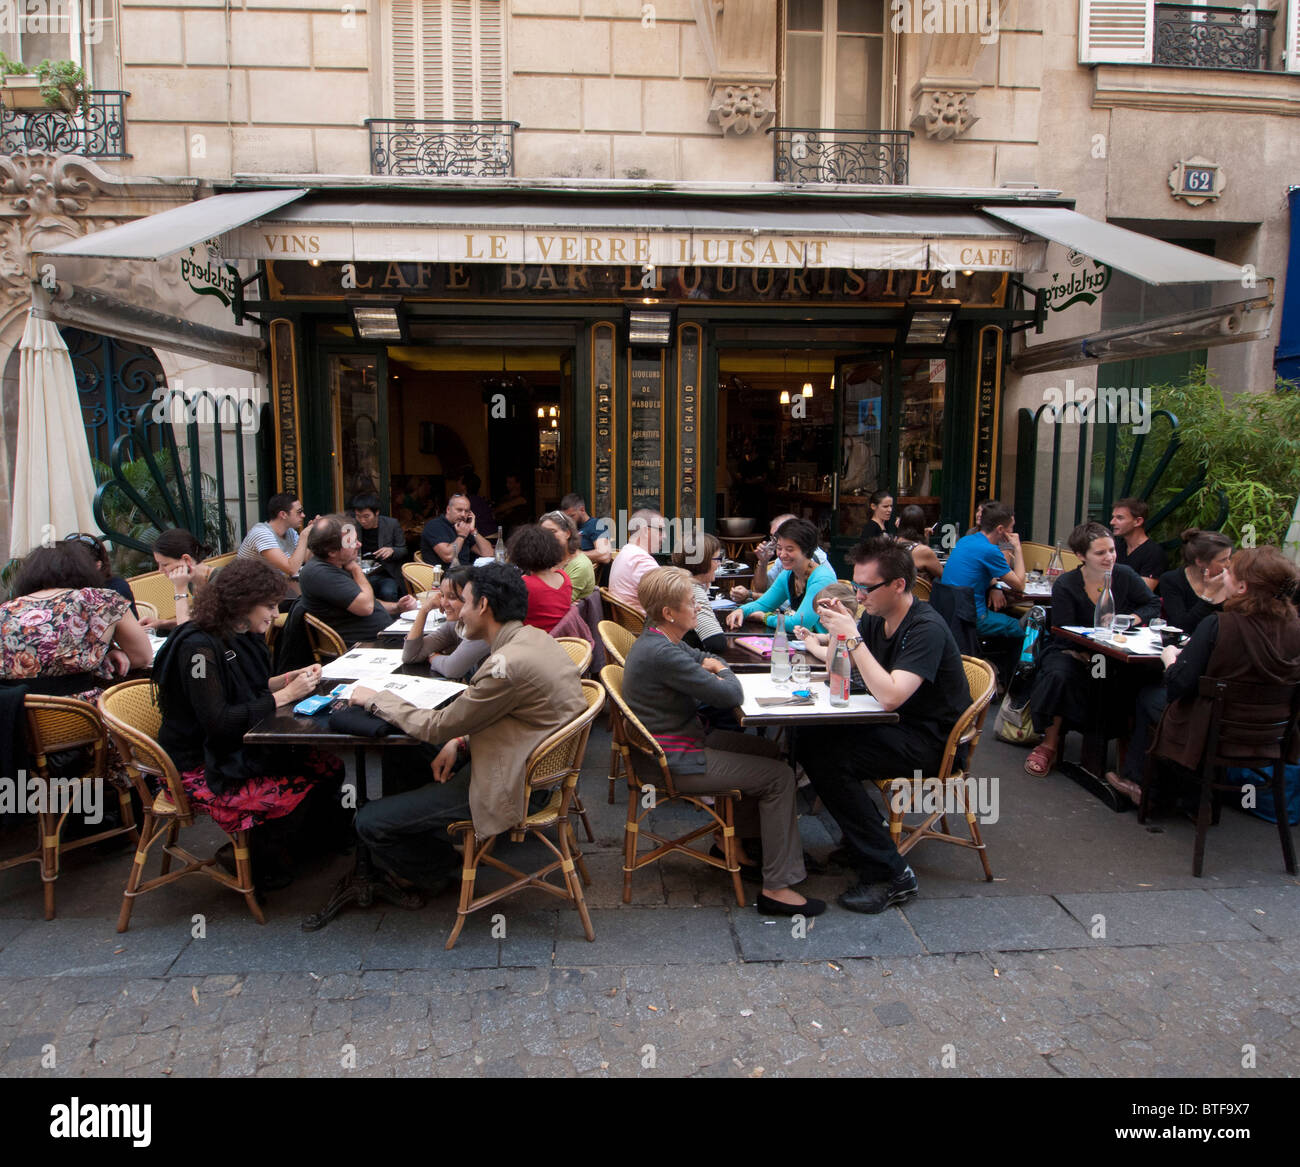 Concurrido restaurante típico de pavimento en el barrio de Marais en París Francia Foto de stock